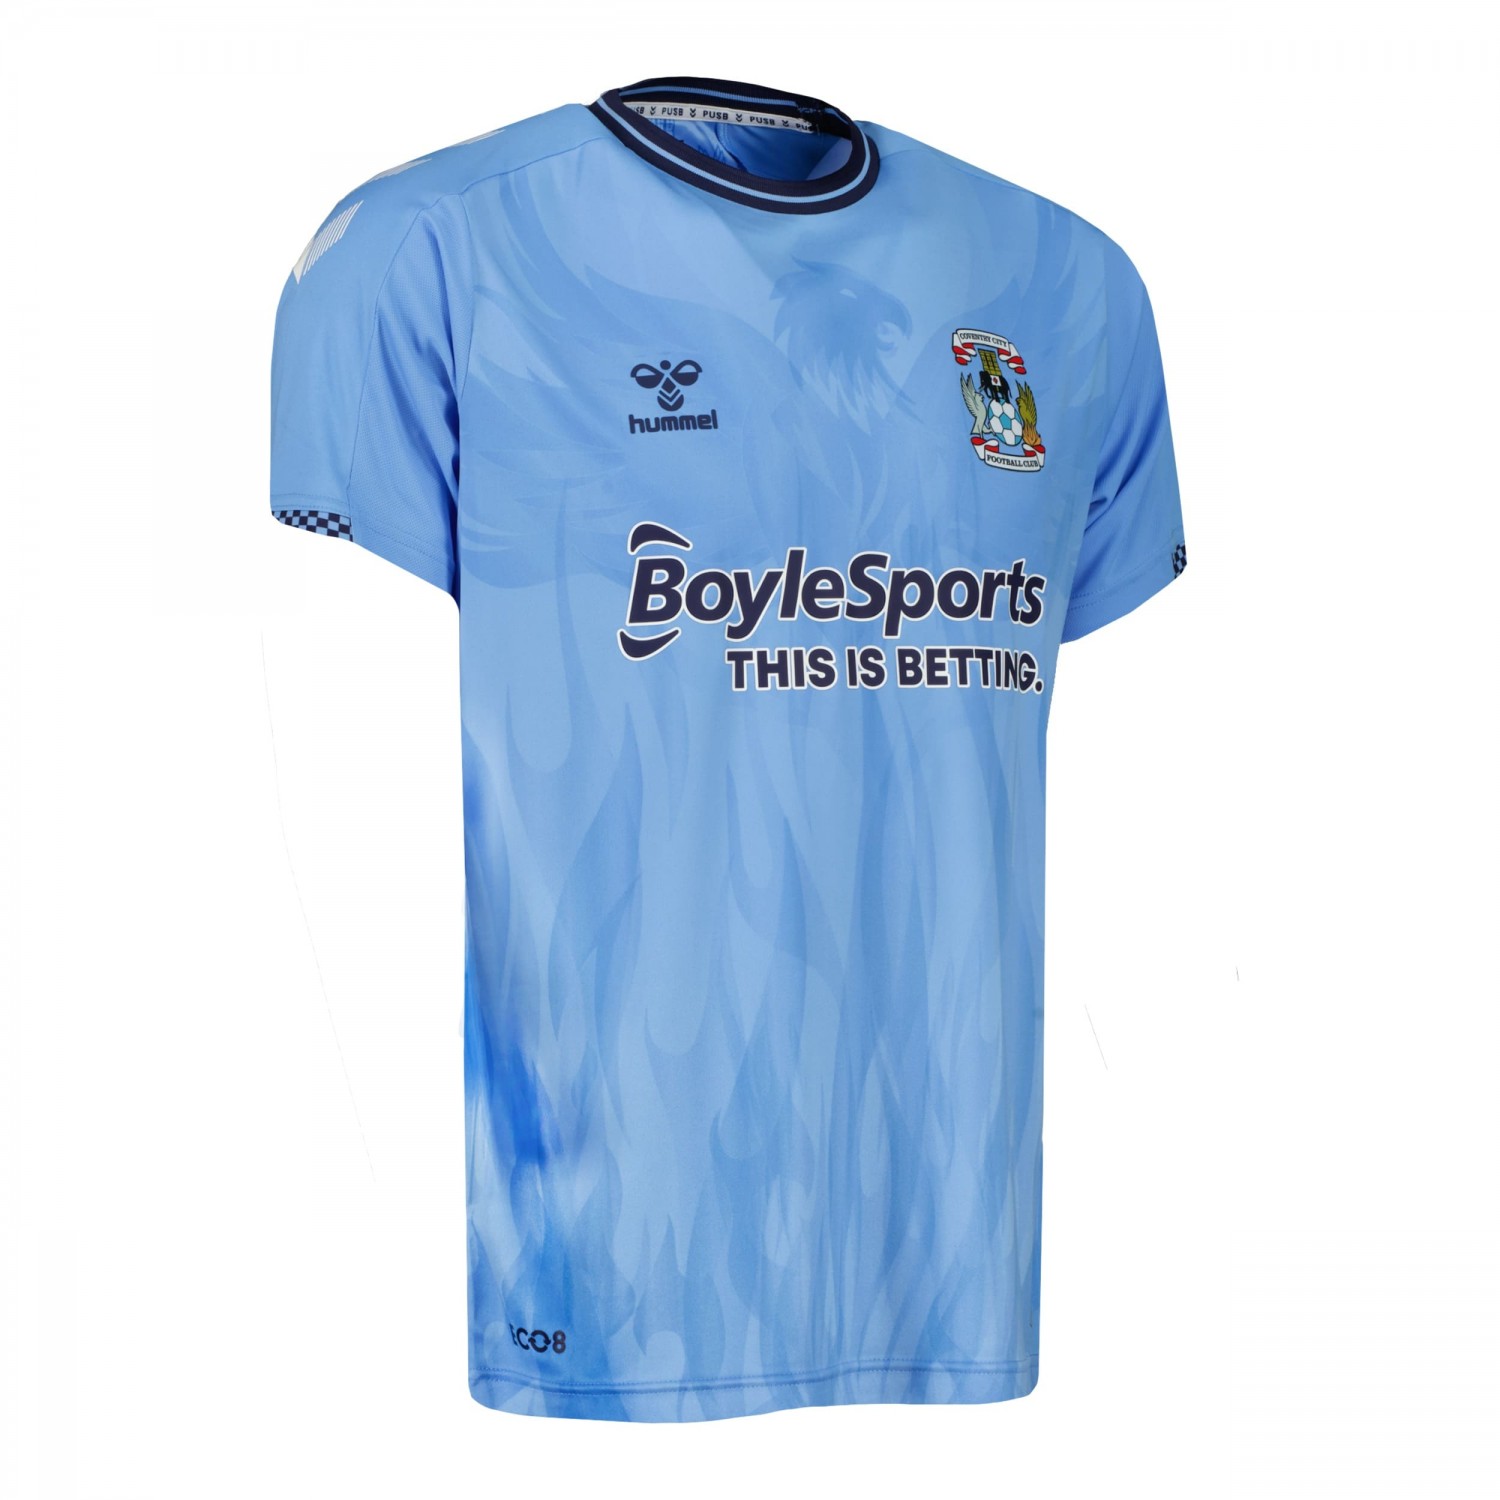 Hummel Coventry City FC Home LS Football Shirt Sky Blue Hummel Size Youth M 128cm 